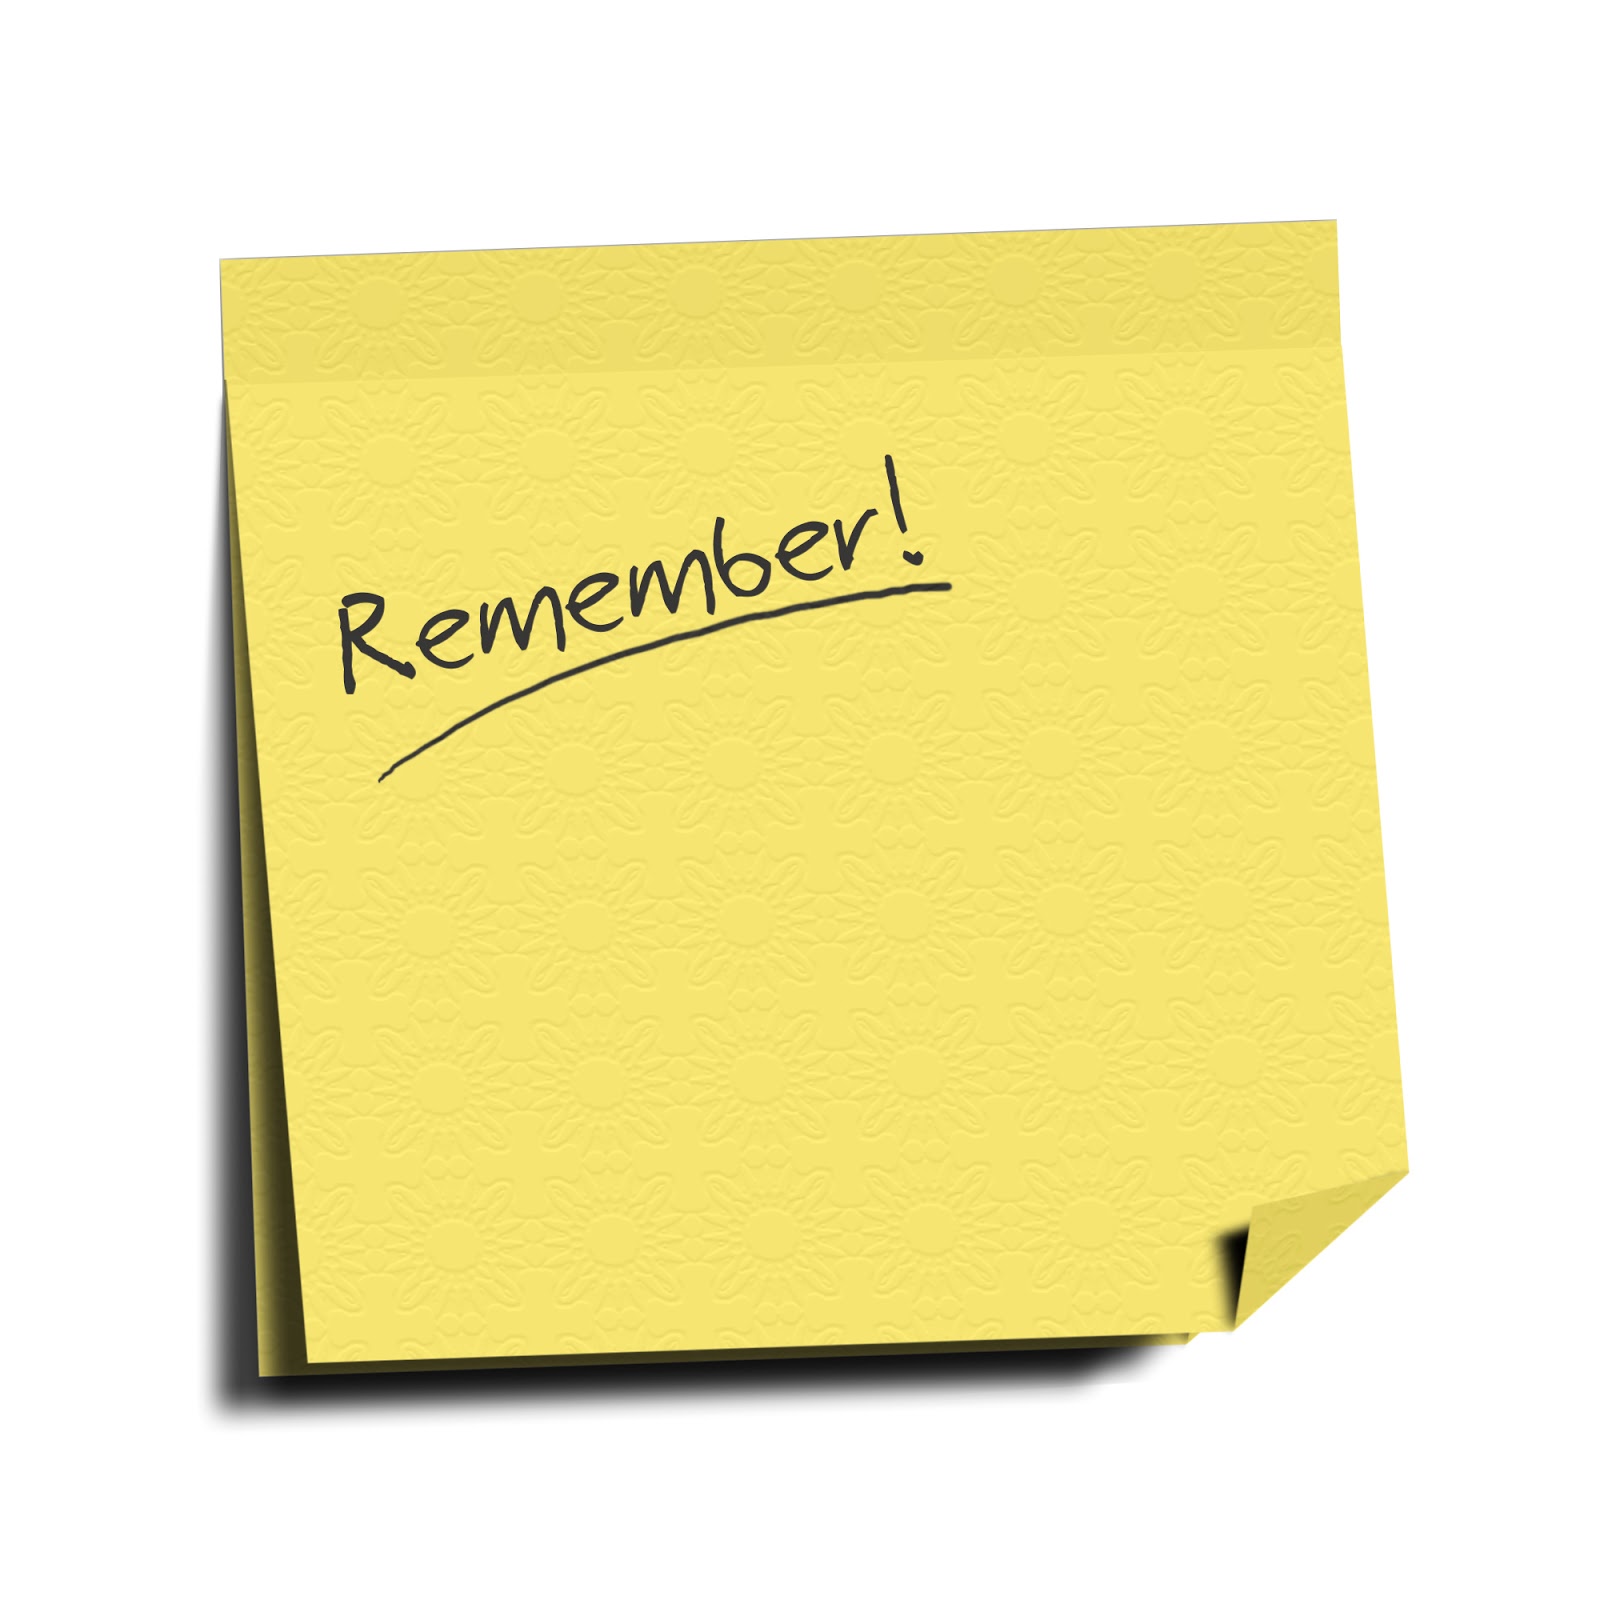 Reminder Notes - ClipArt Best